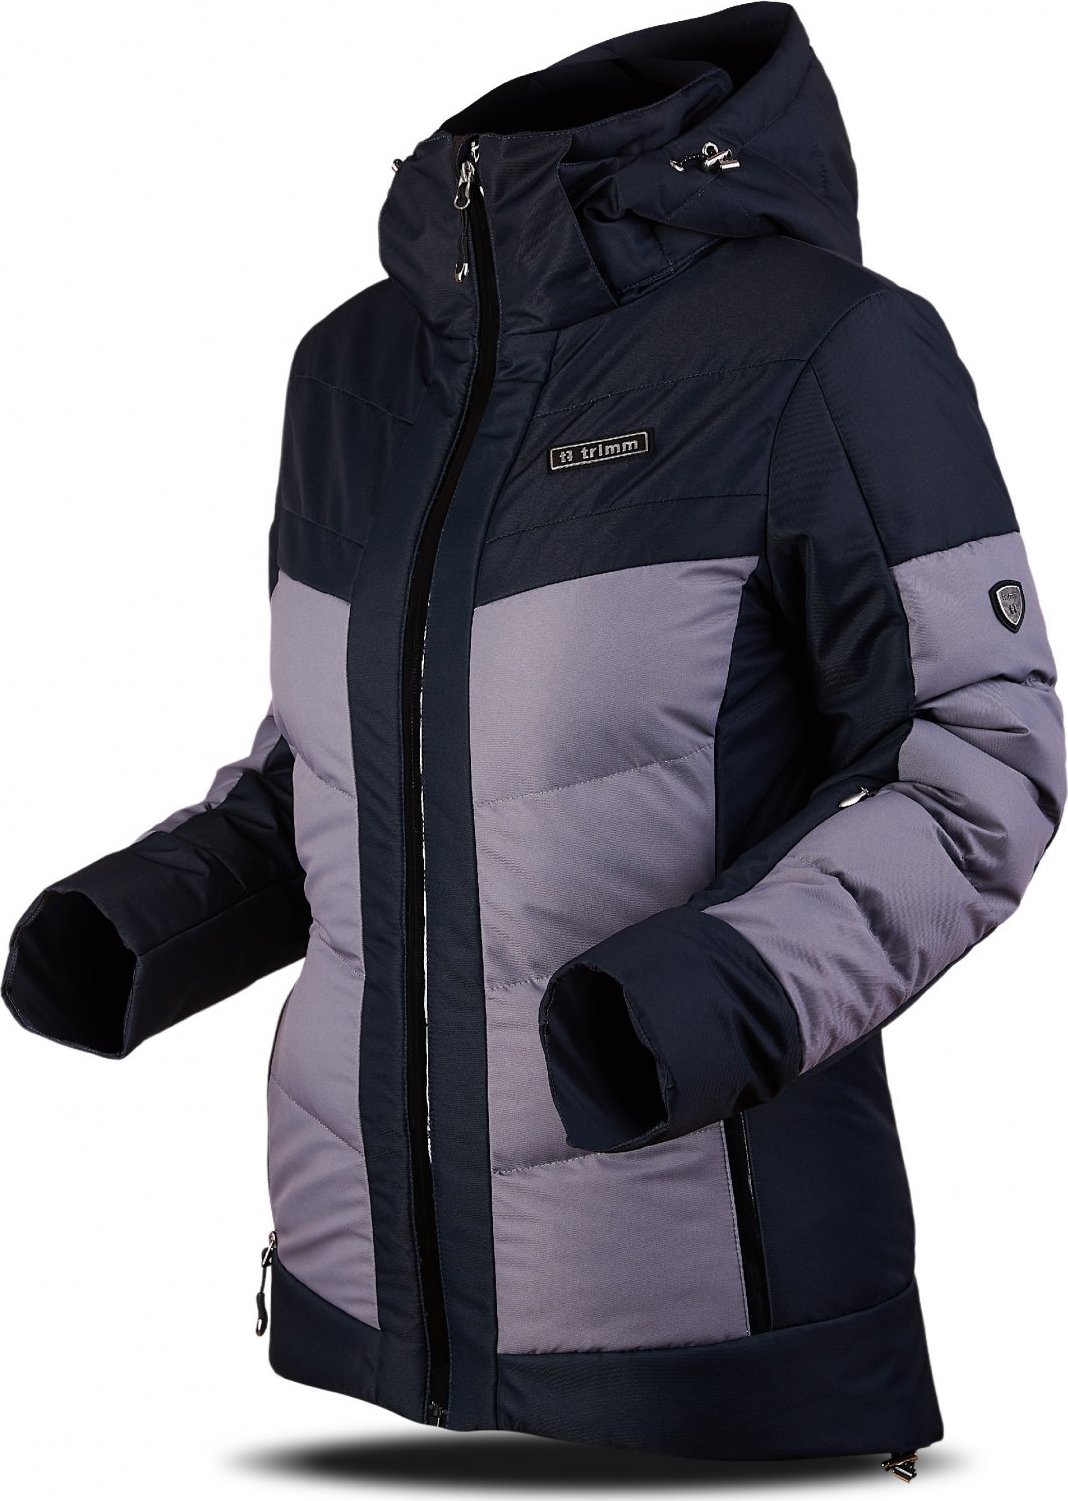 Dámská lyžařská bunda TRIMM Vario Lady šedá/černá Velikost: XL, Barva: grey/ black